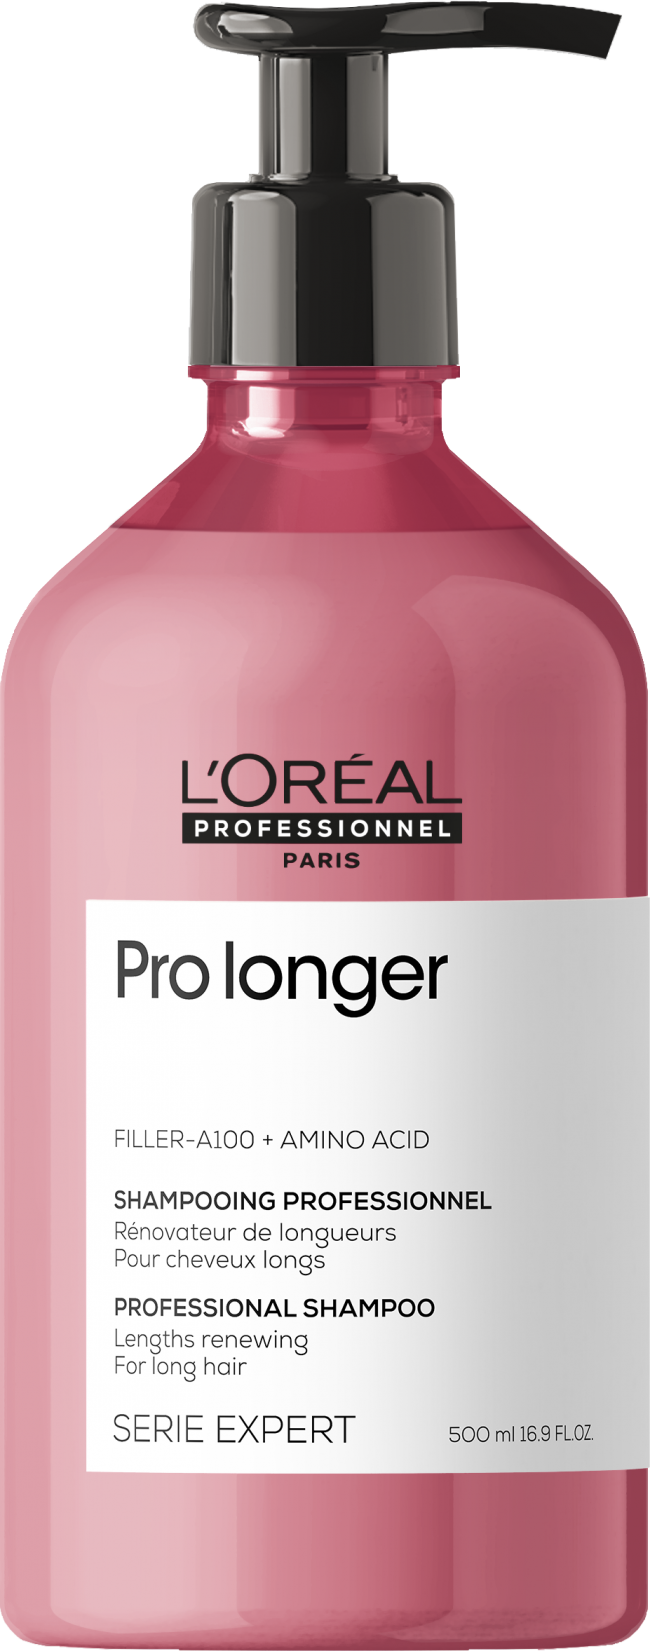 LOREAL לוריאל SERIE EXPERT | פרו לונגר שמפו לשיער ארוך לחידוש אורכי השיער | 500 מ"ל